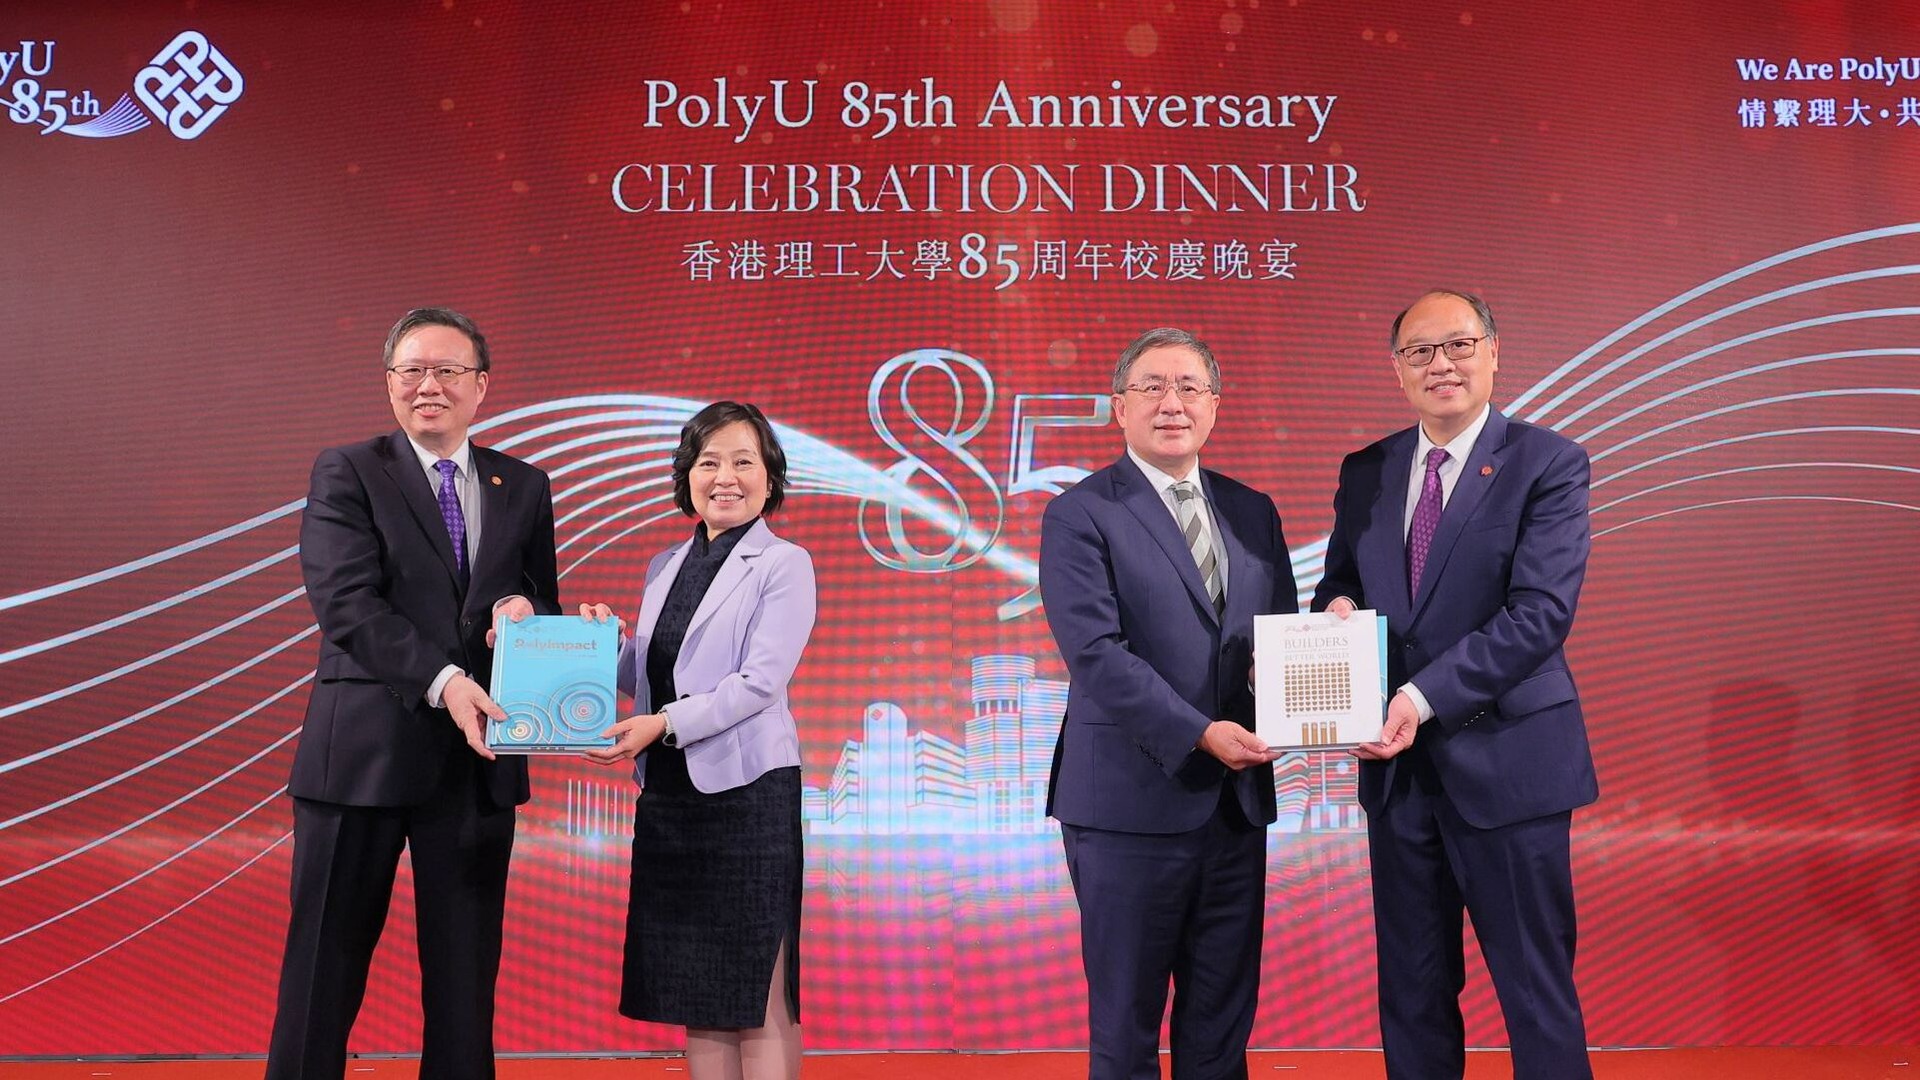 PolyU 85th Anniversary Dinner05a1920x1080